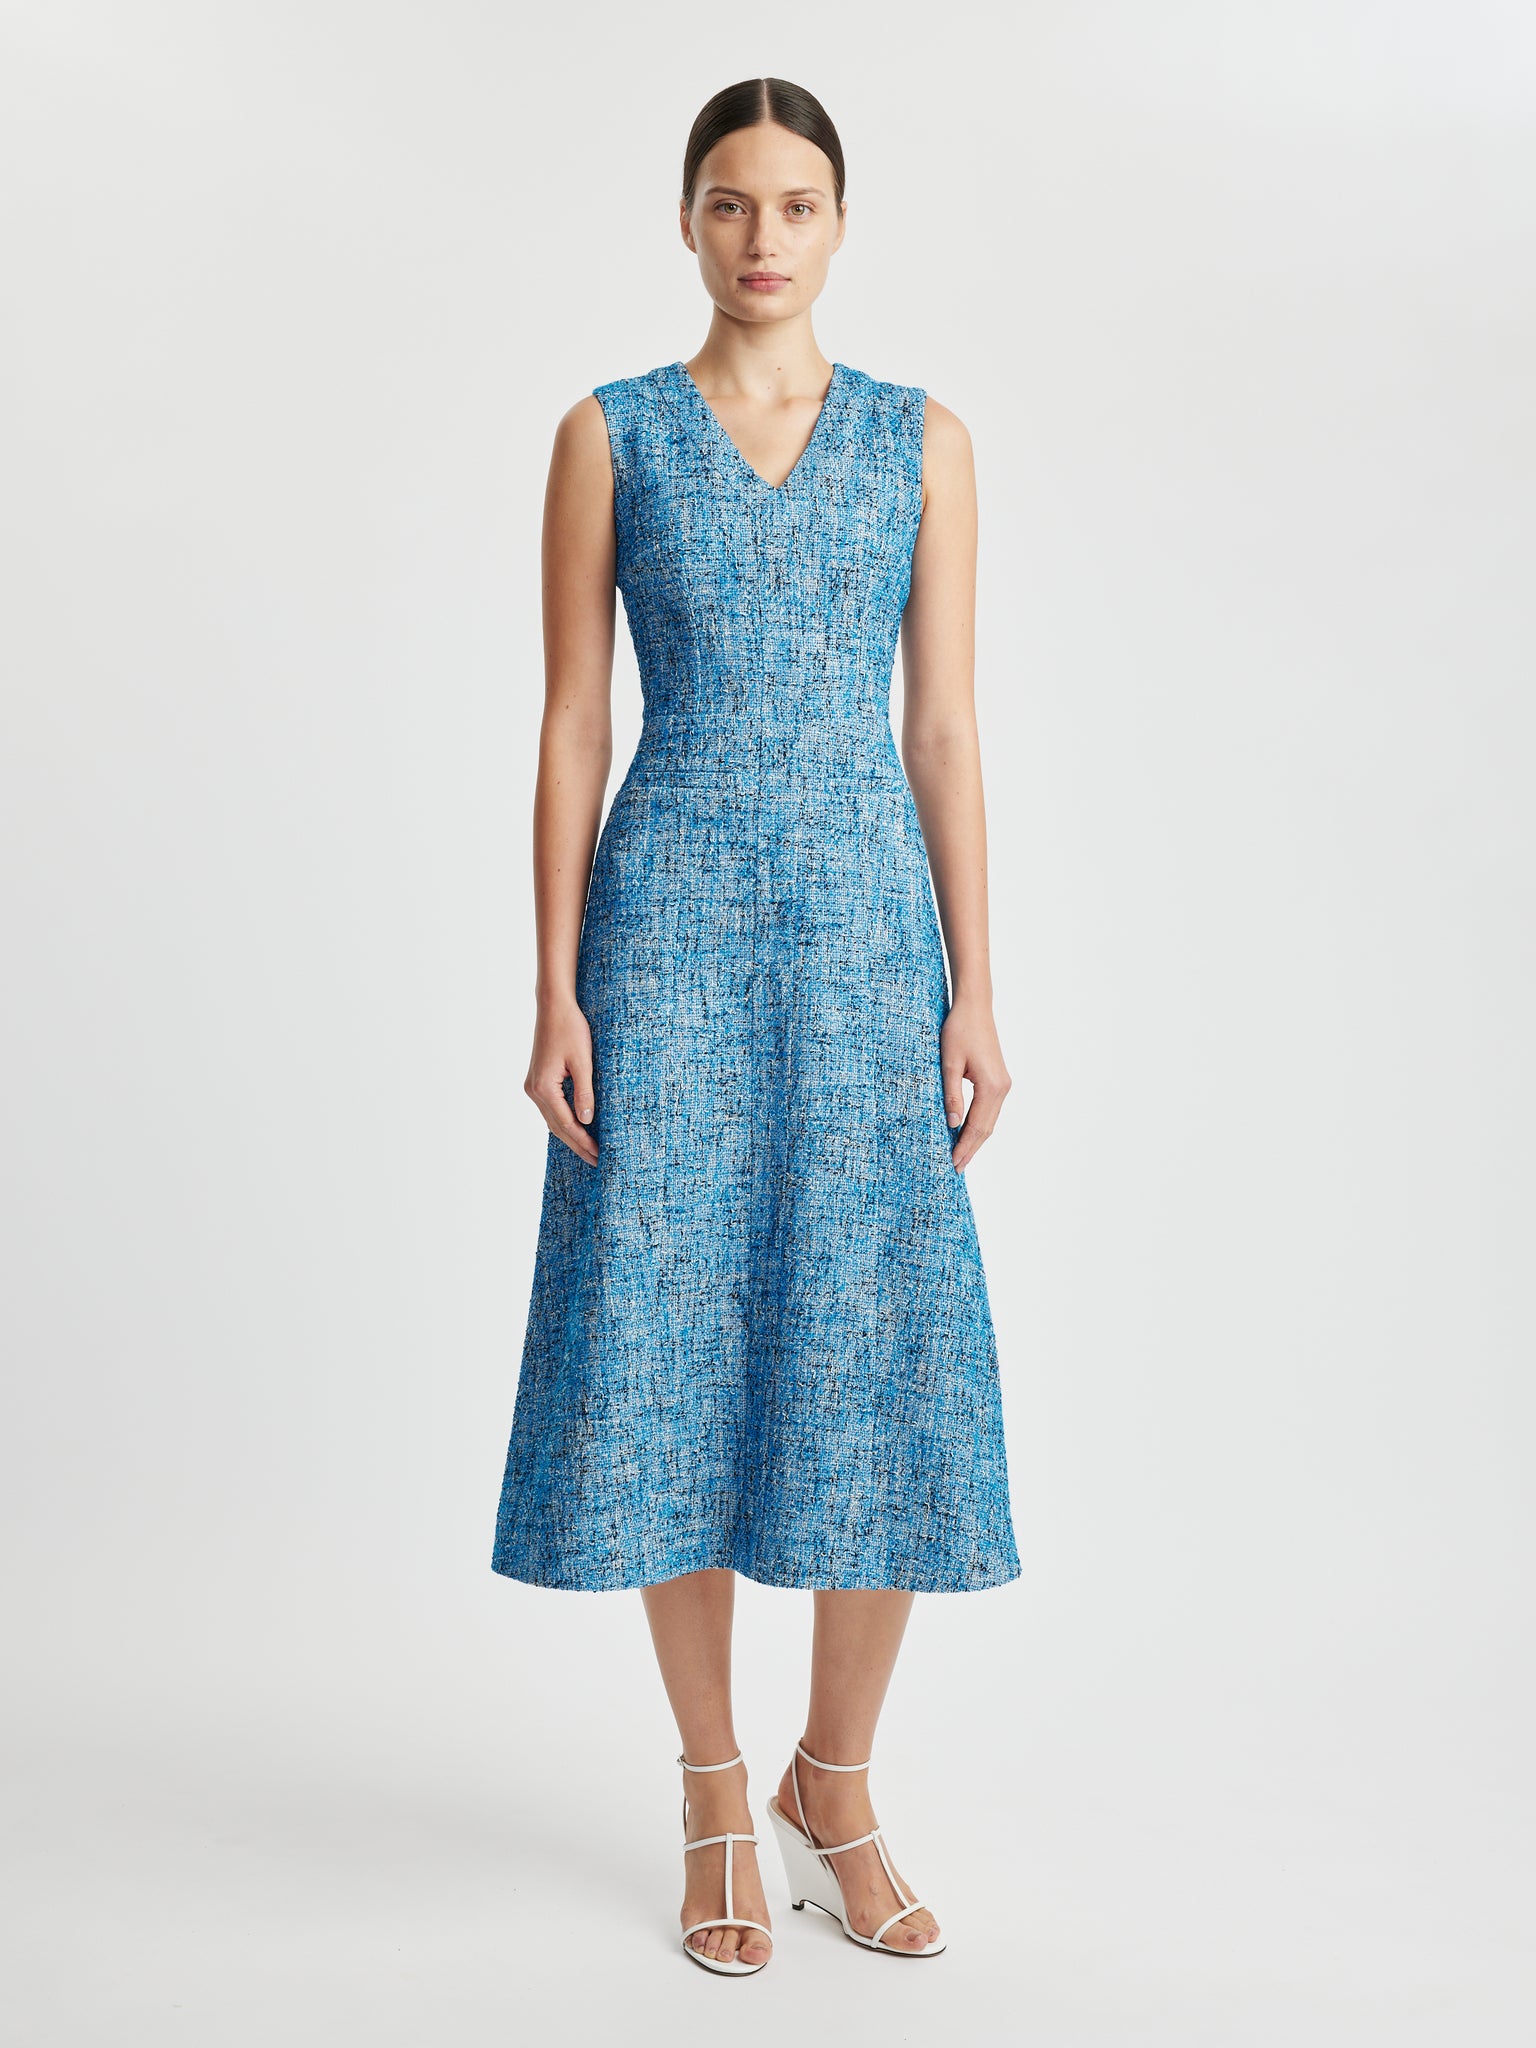 Mio Dress In Blue Cotton Tweed | Emilia Wickstead